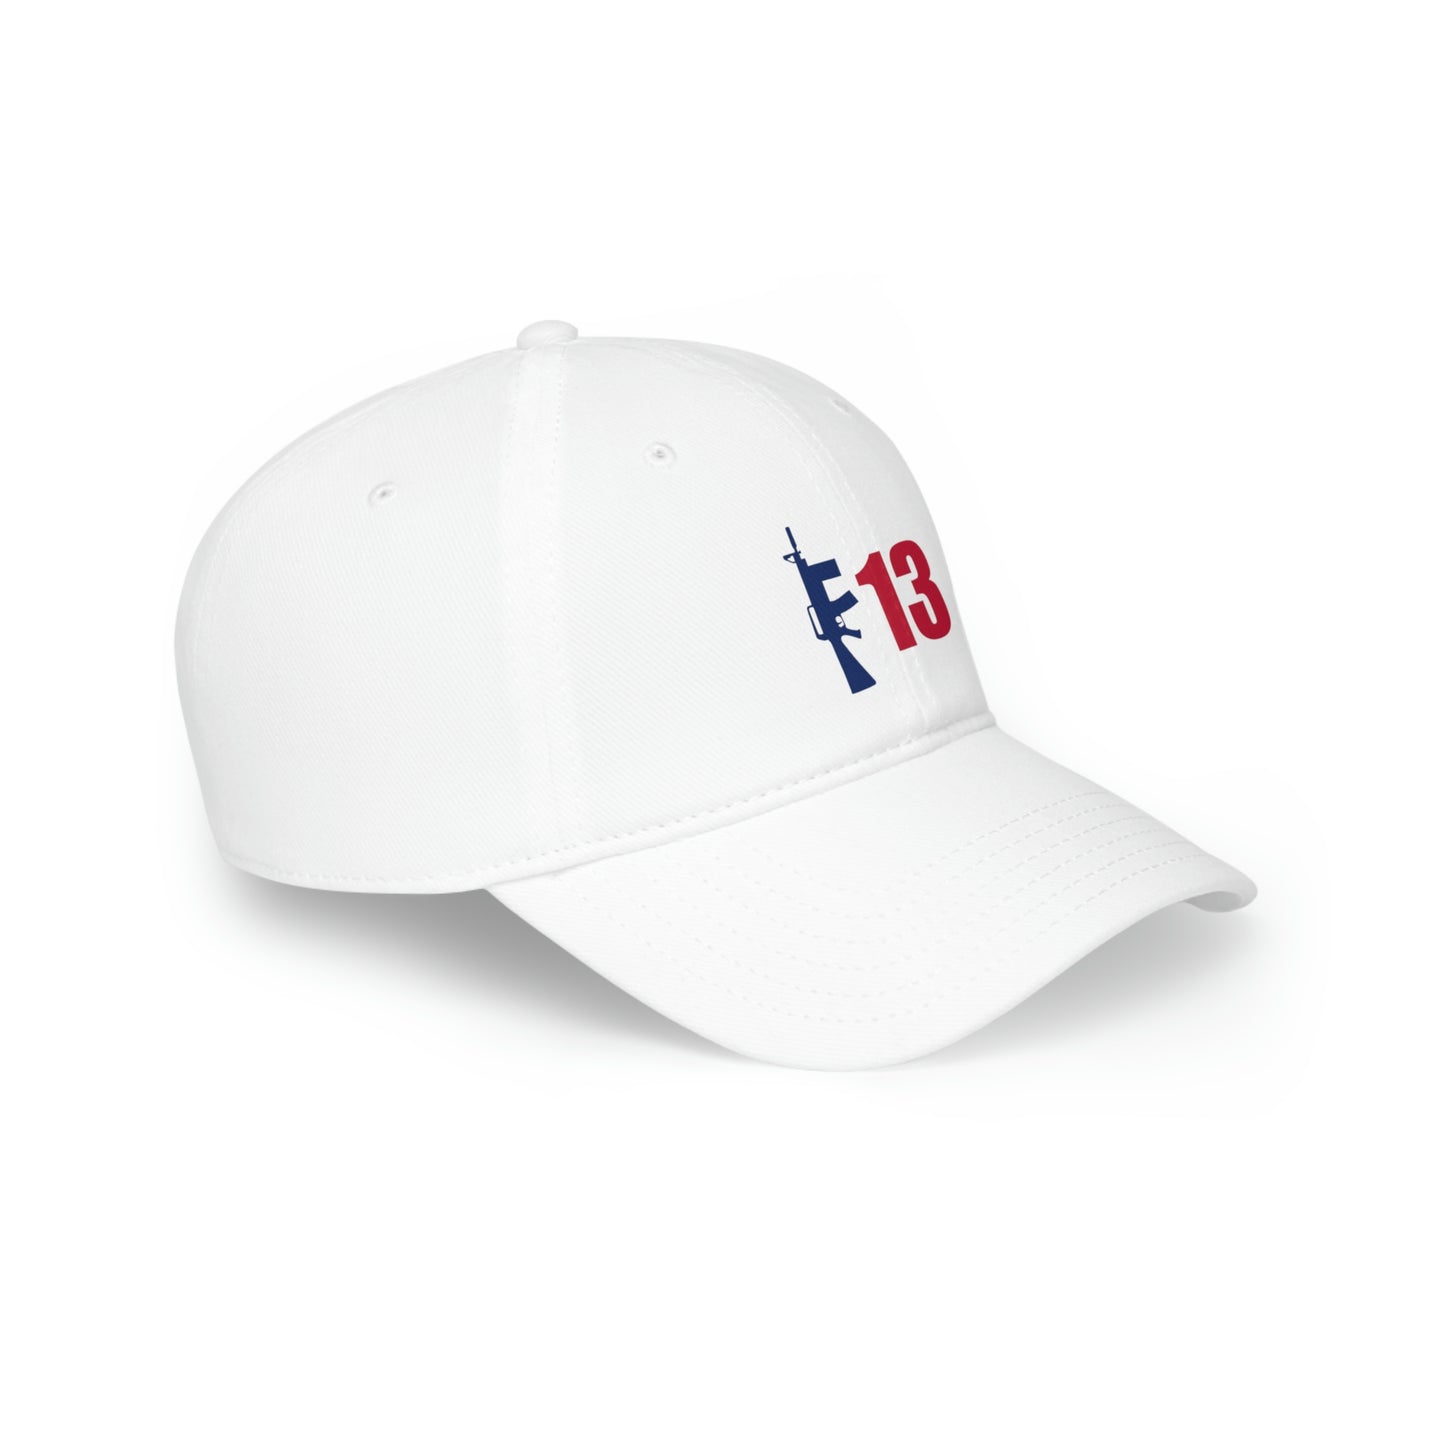 Low Profile Baseball Cap F13 on white